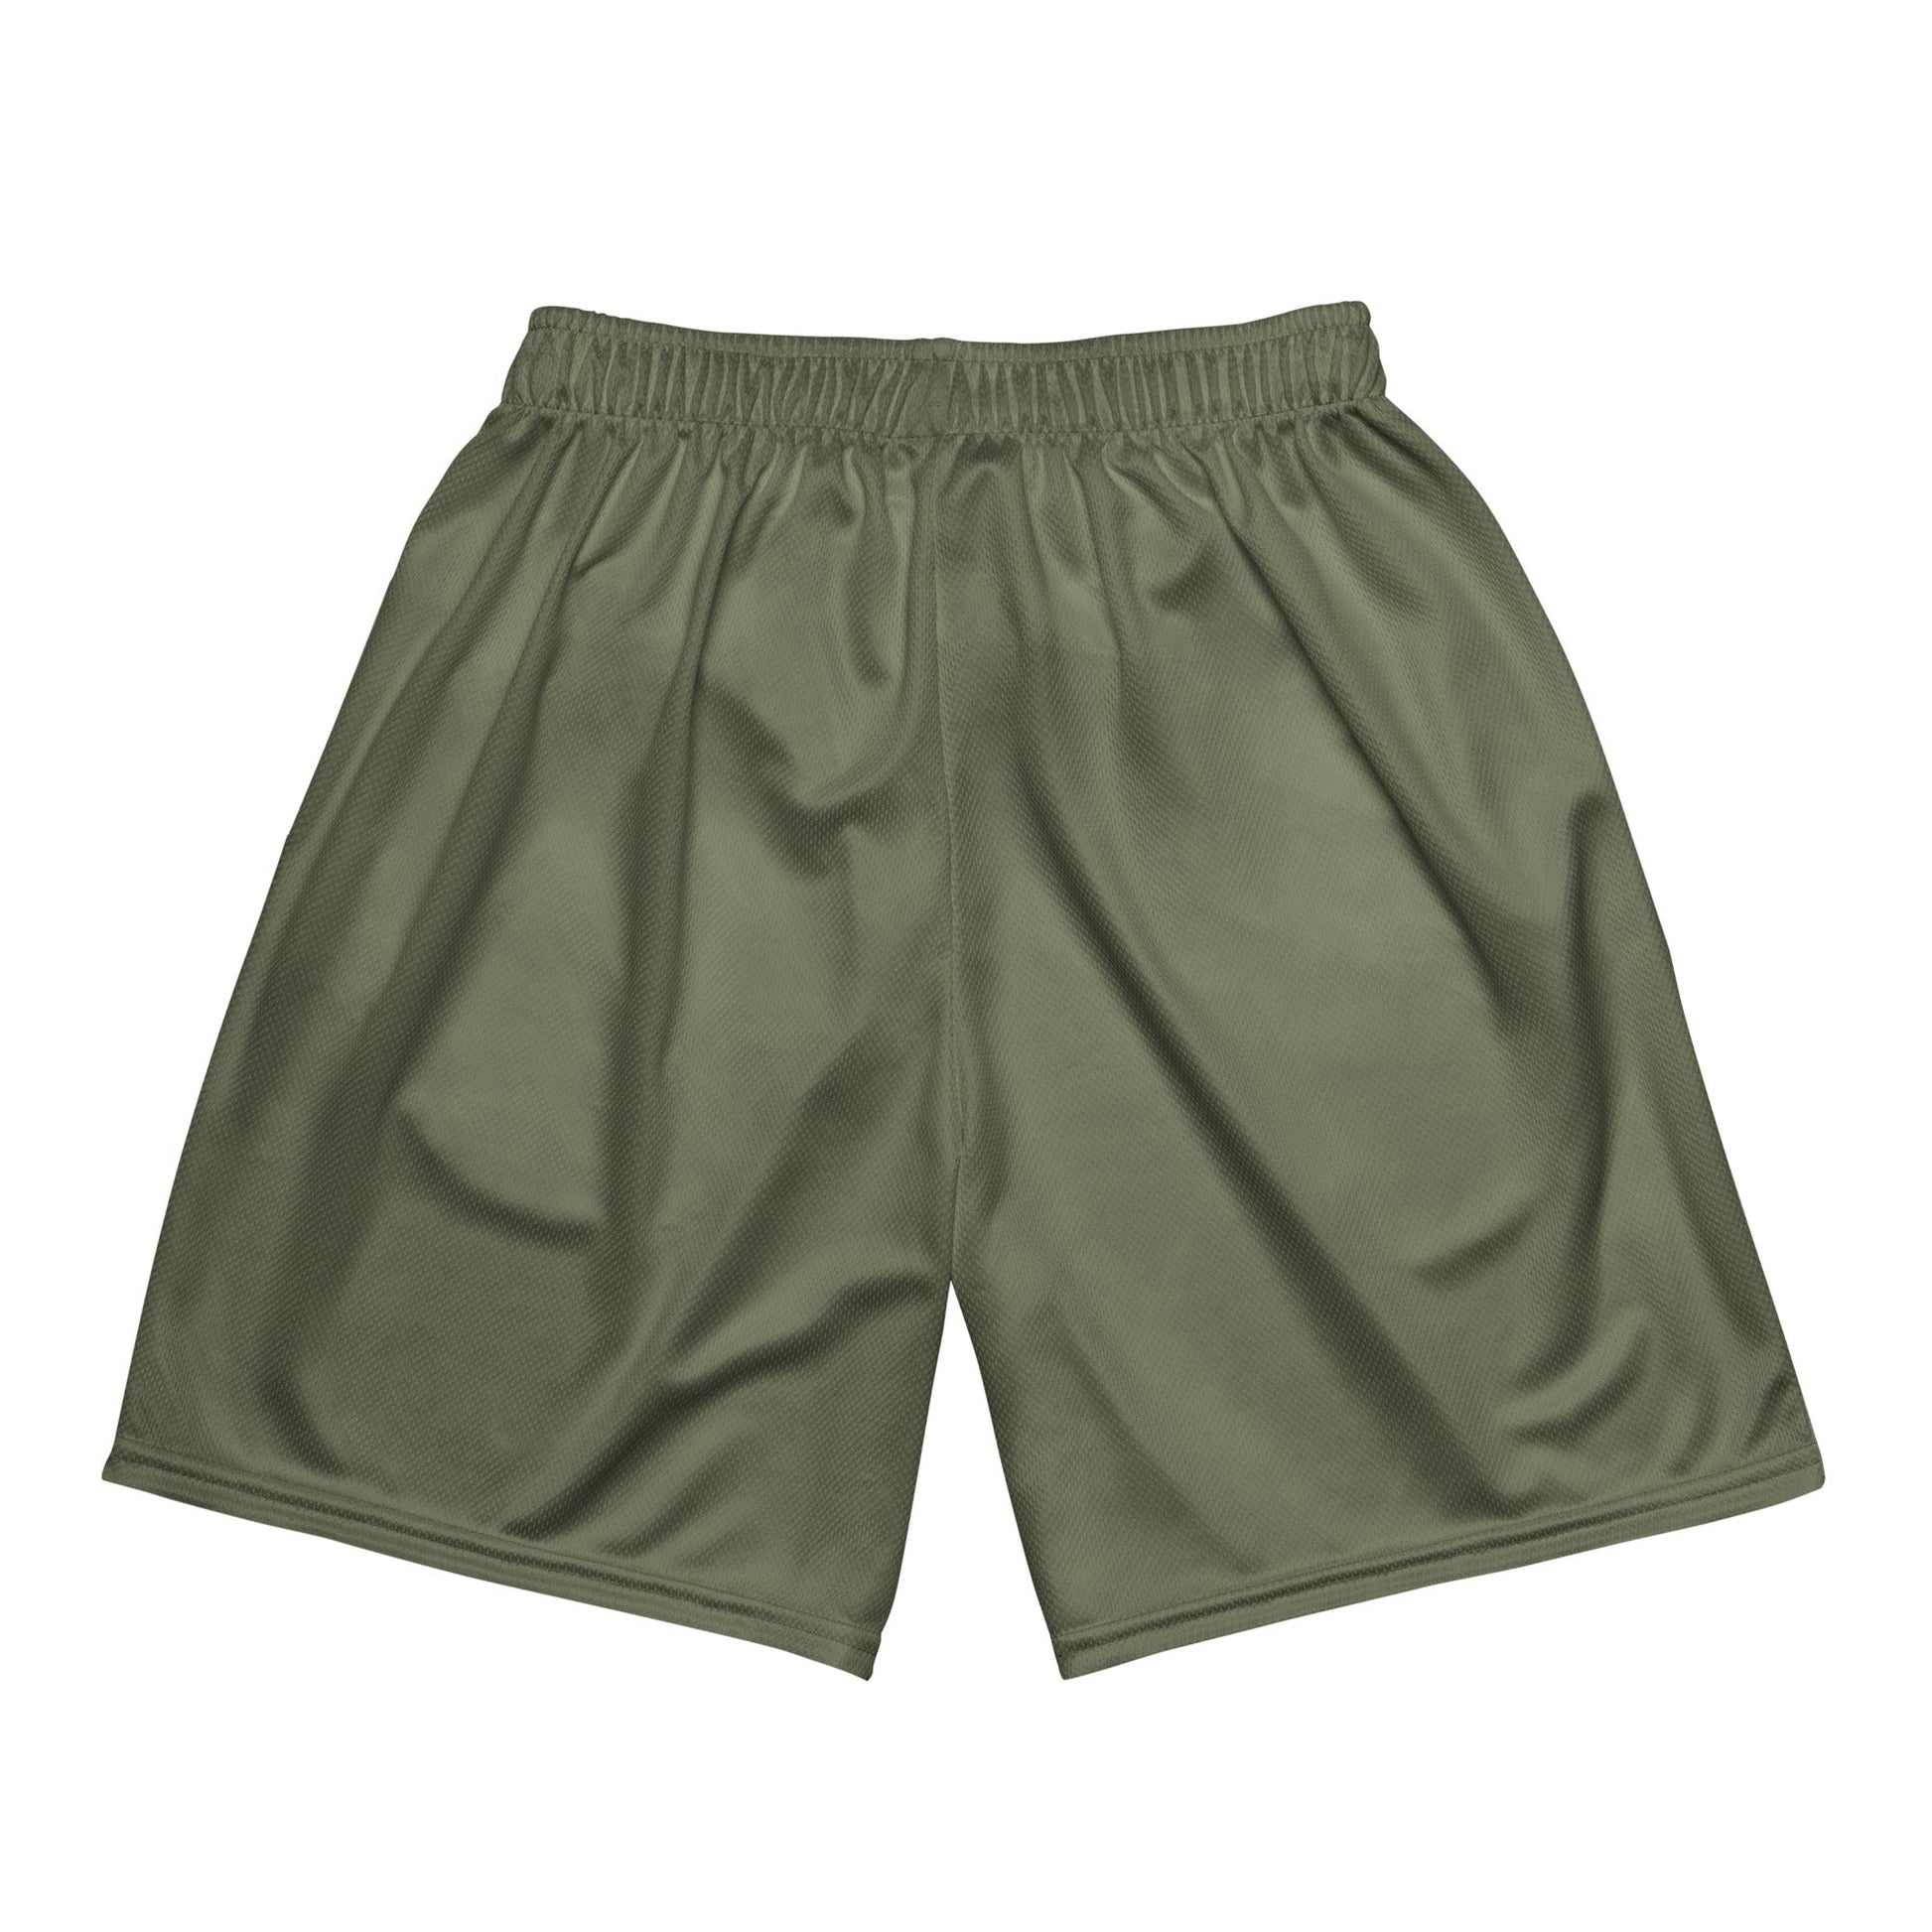 Green Men's Mesh Shorts